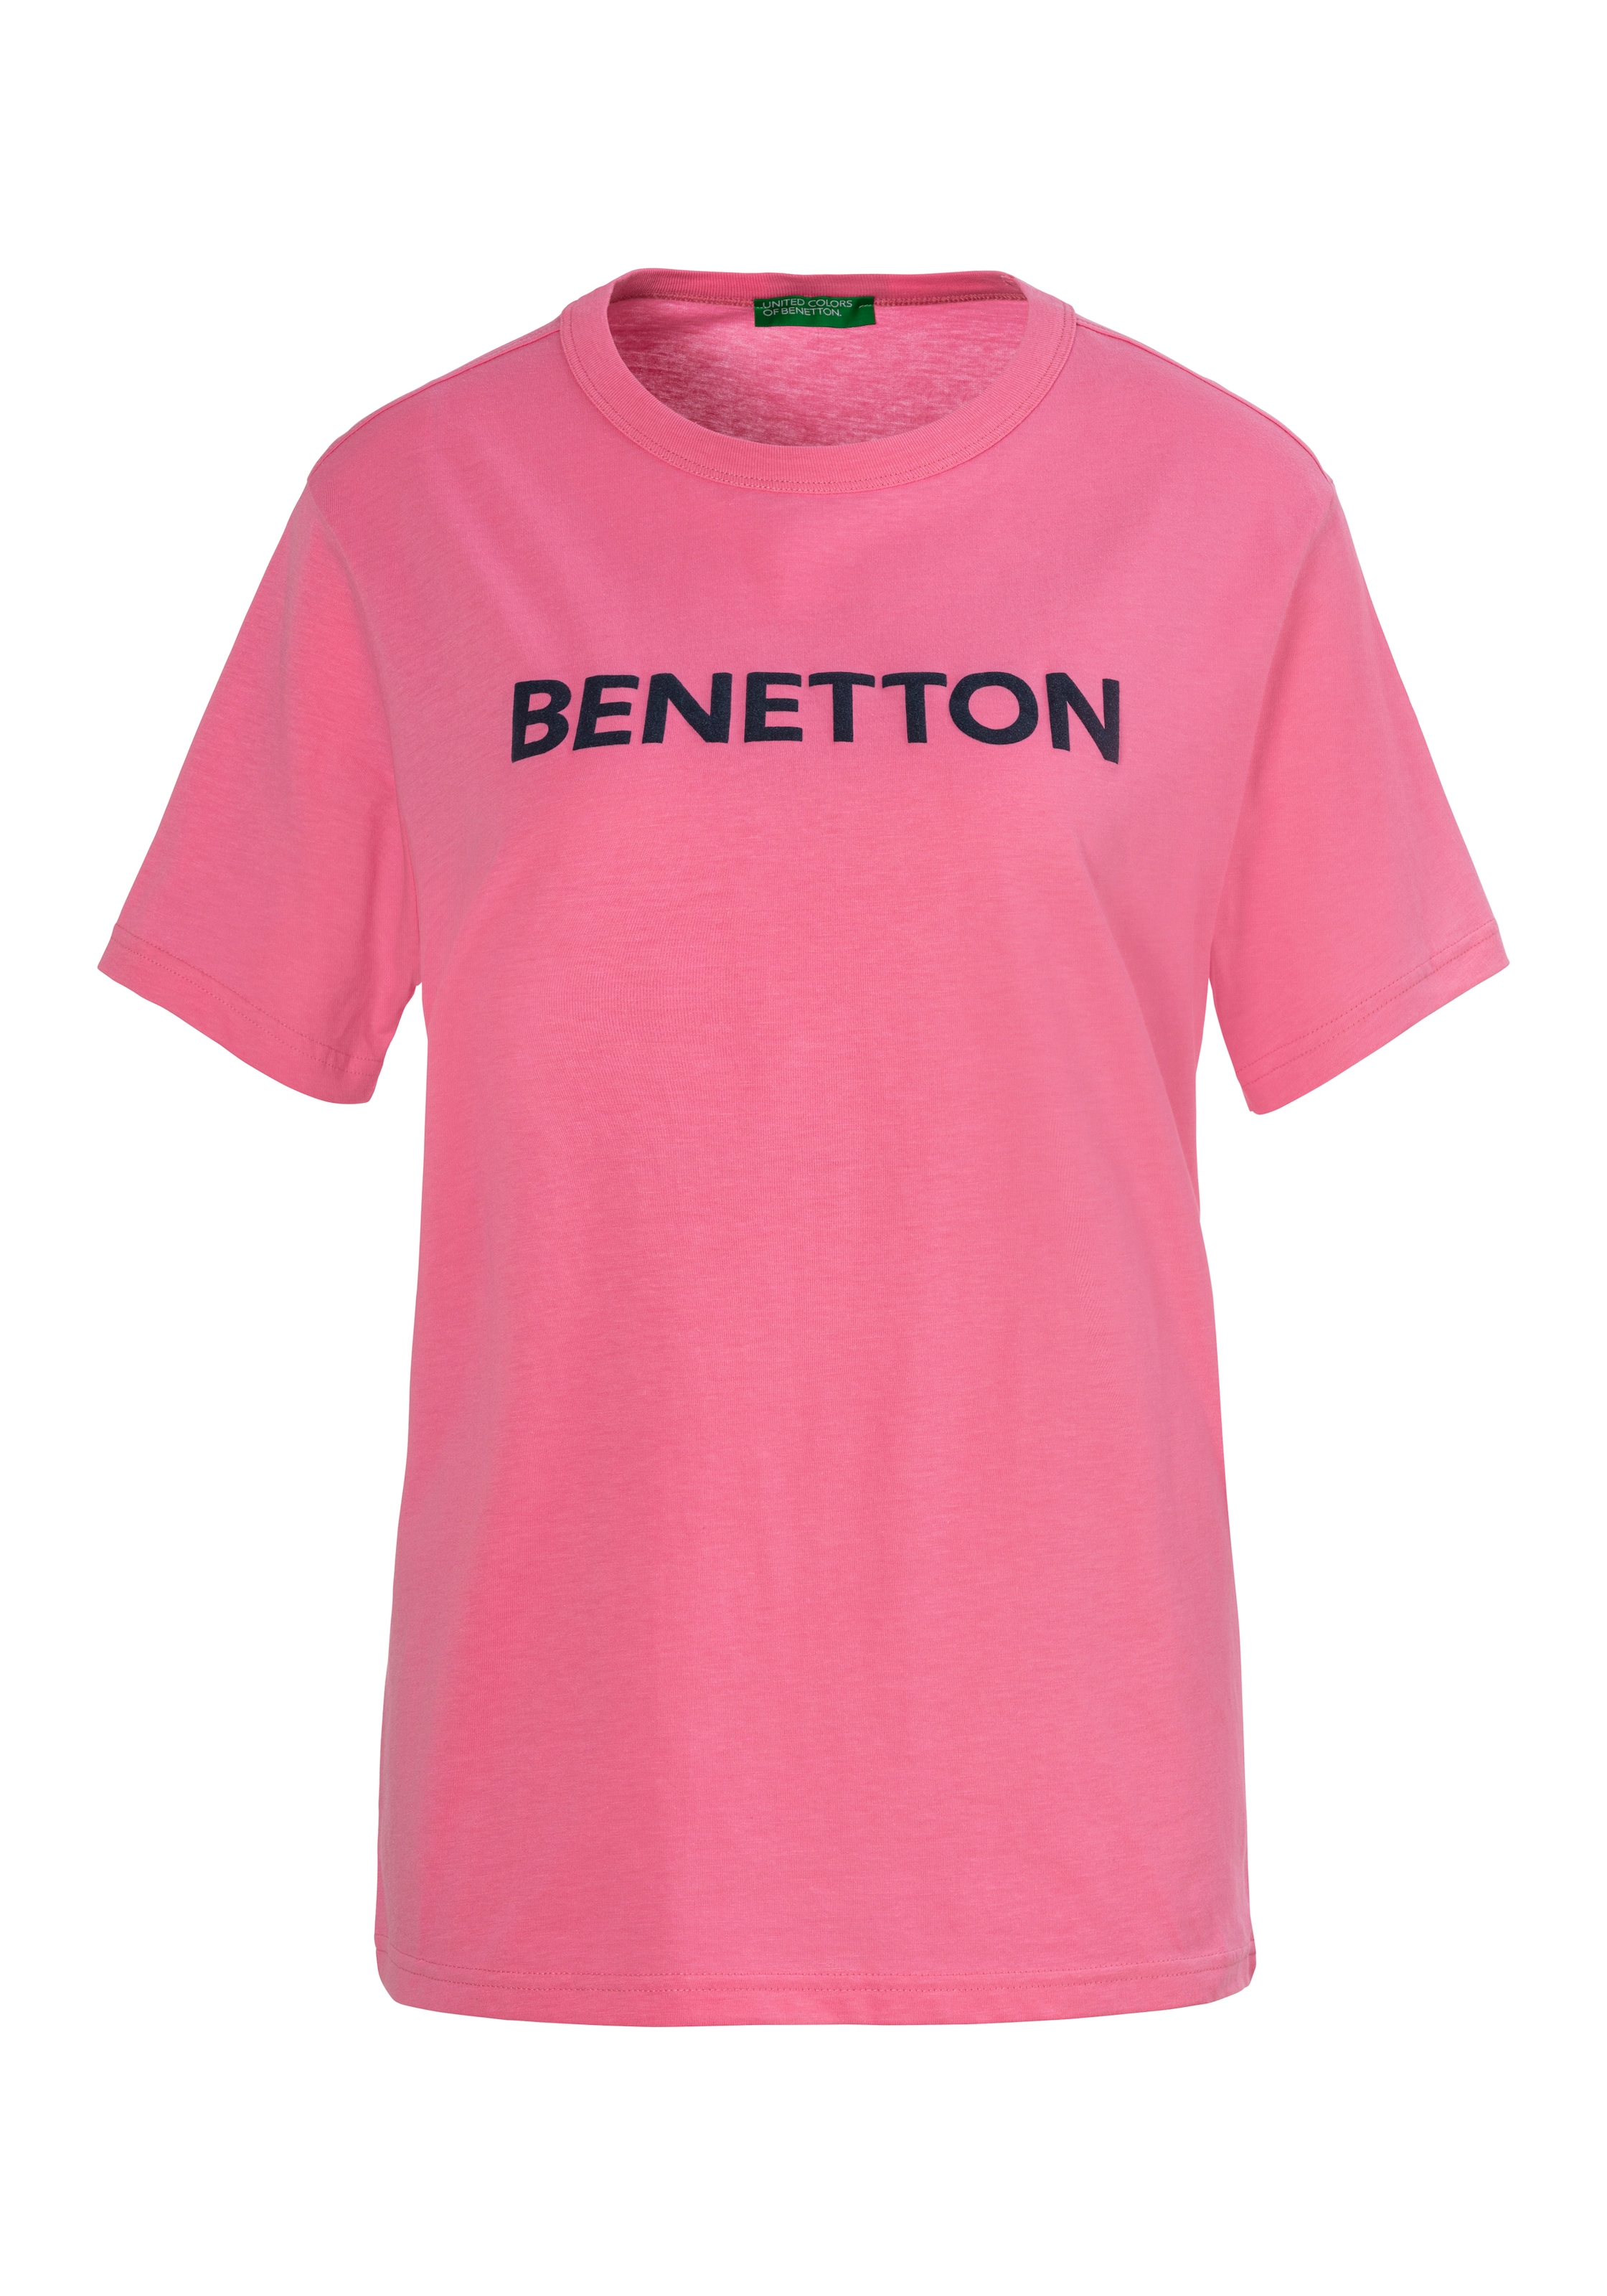 United Colors of shoppen Aufdruck mit online T-Shirt, Benetton Benetton